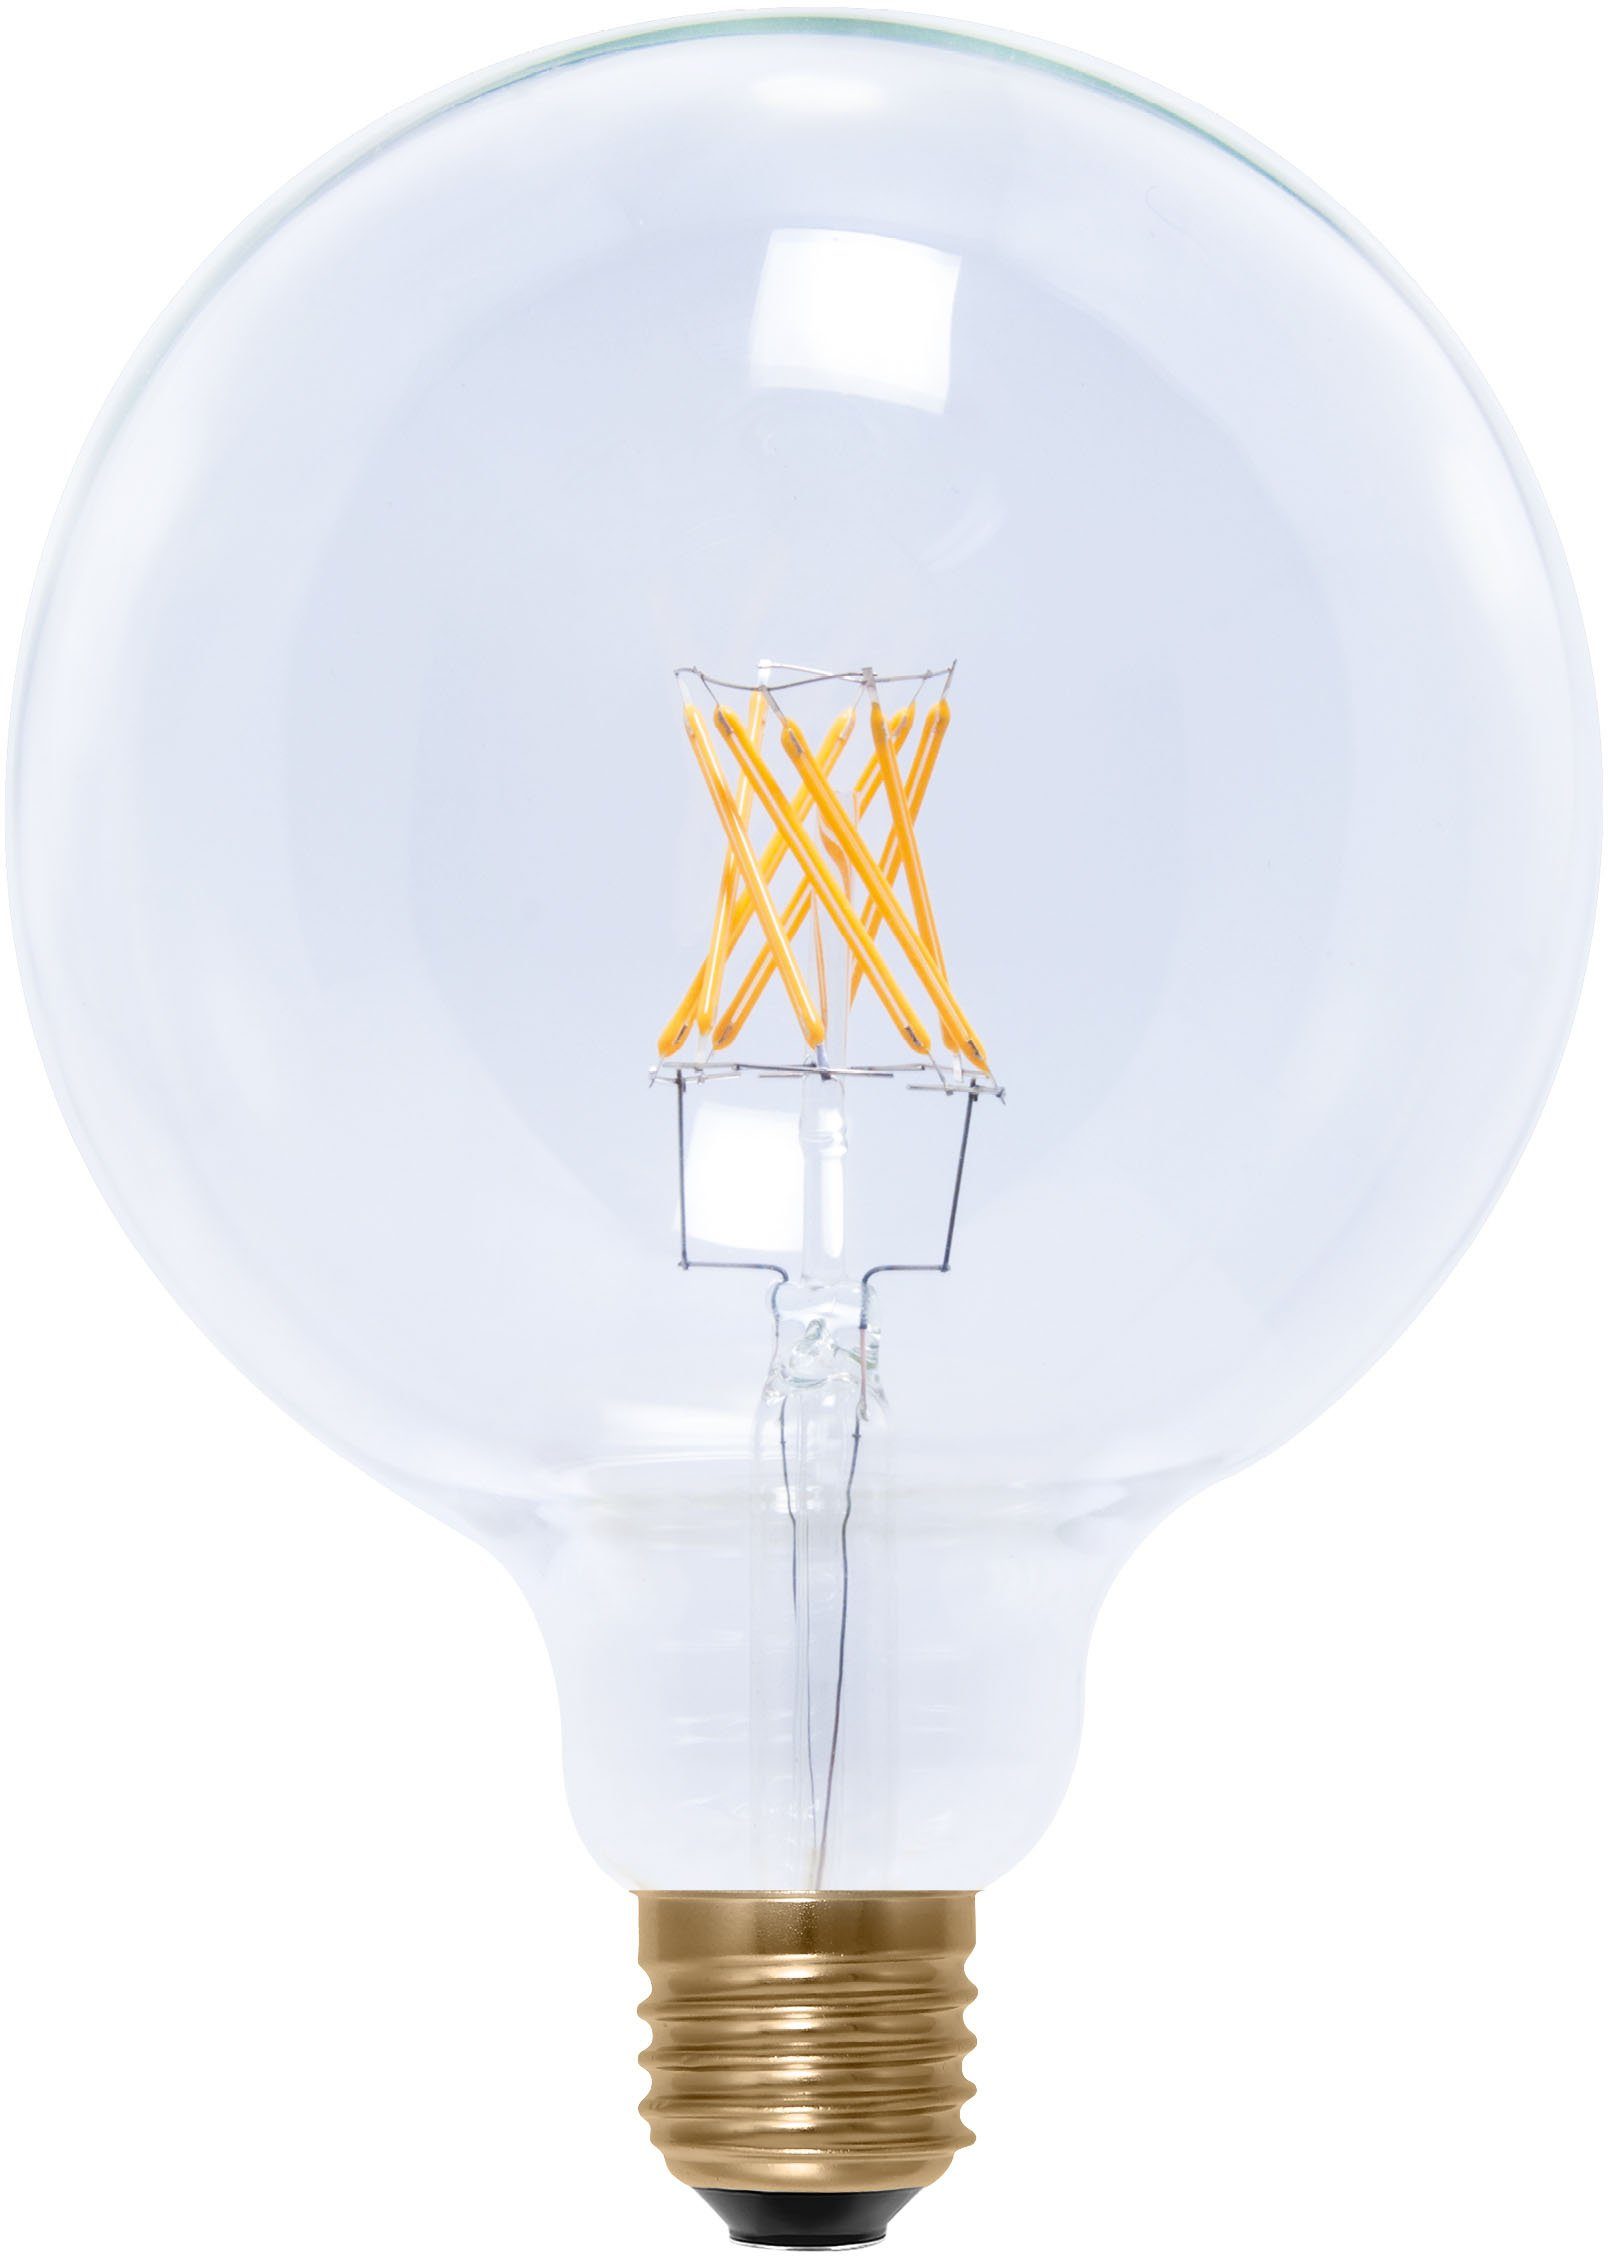 SEGULA LED-Leuchtmittel LED Globe 125 klar, E27, Warmweiß, dimmbar, E27, Globe 125, klar